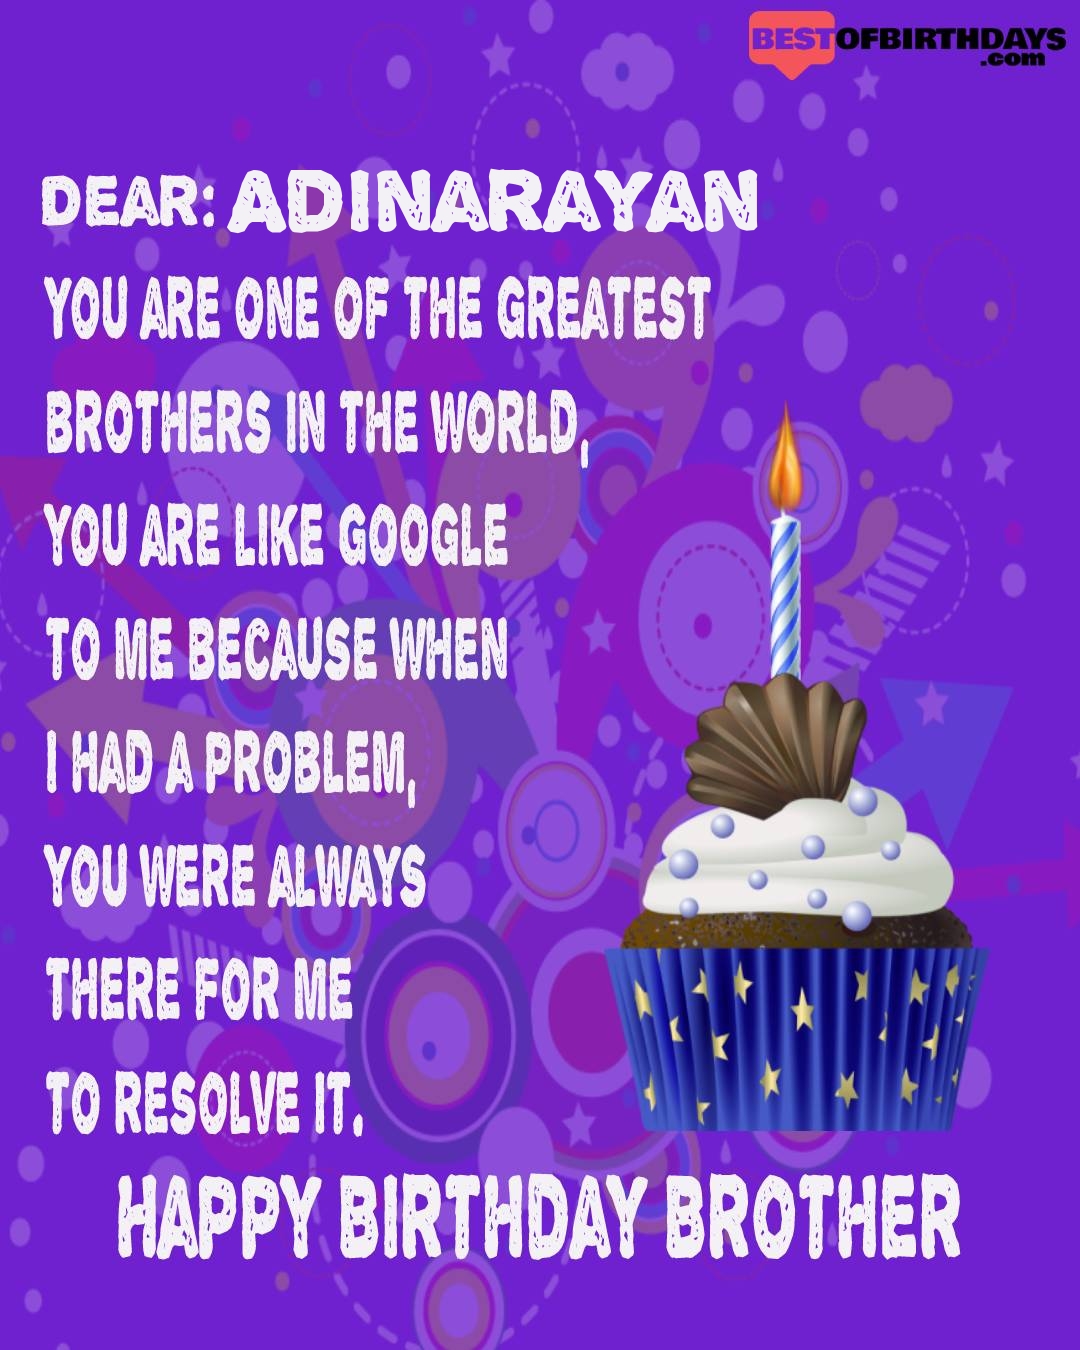 Happy birthday adinarayan bhai brother bro